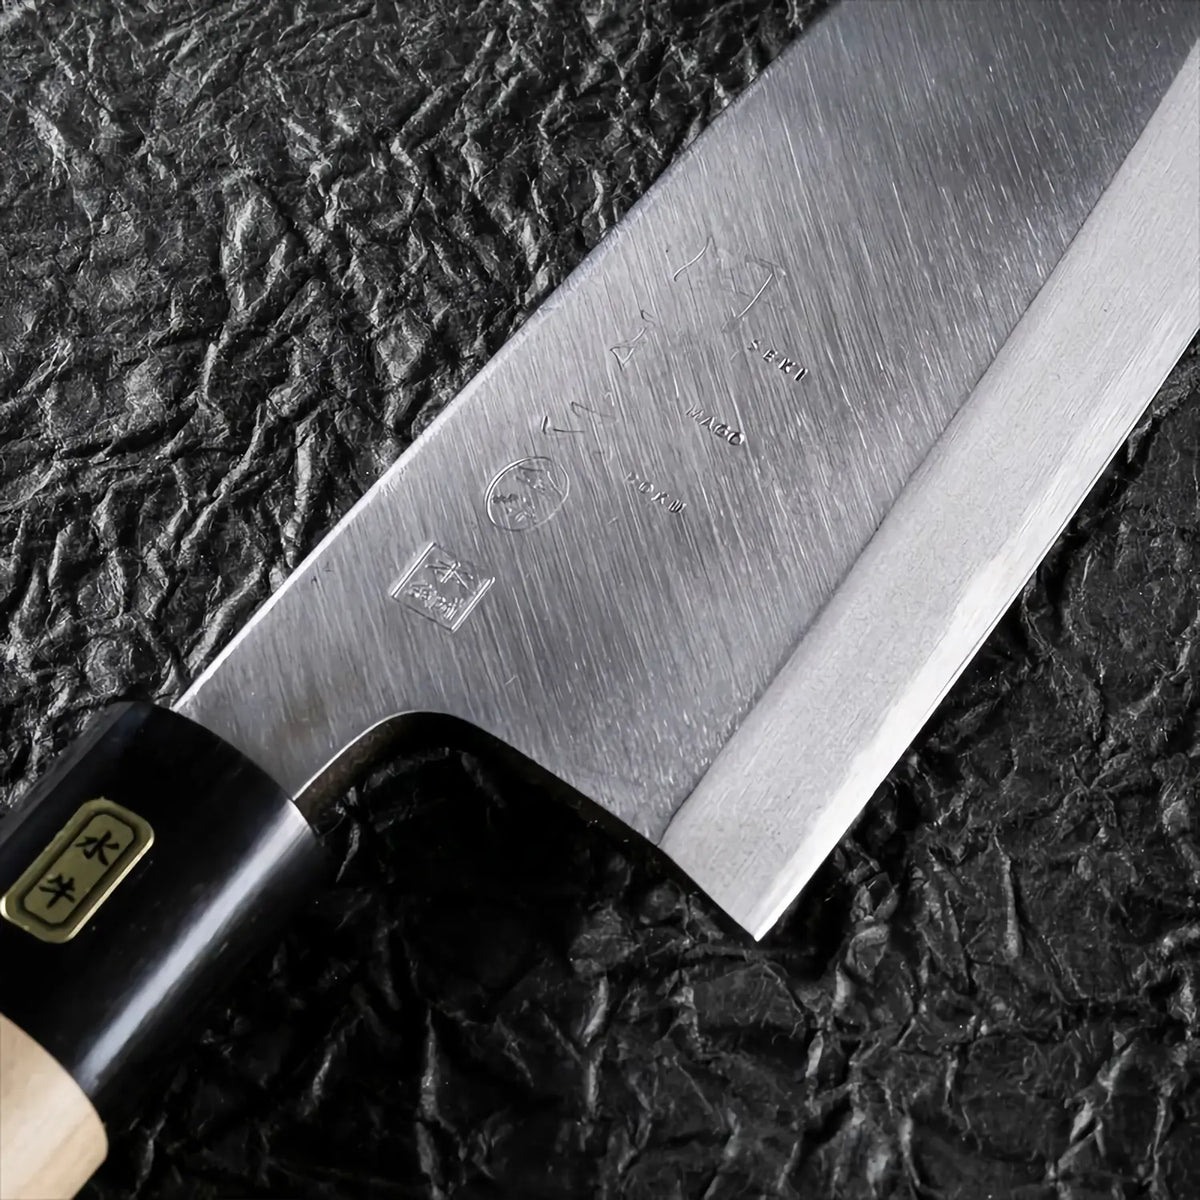 Seki Magoroku Kinju Honhagane Steel Deba Knife